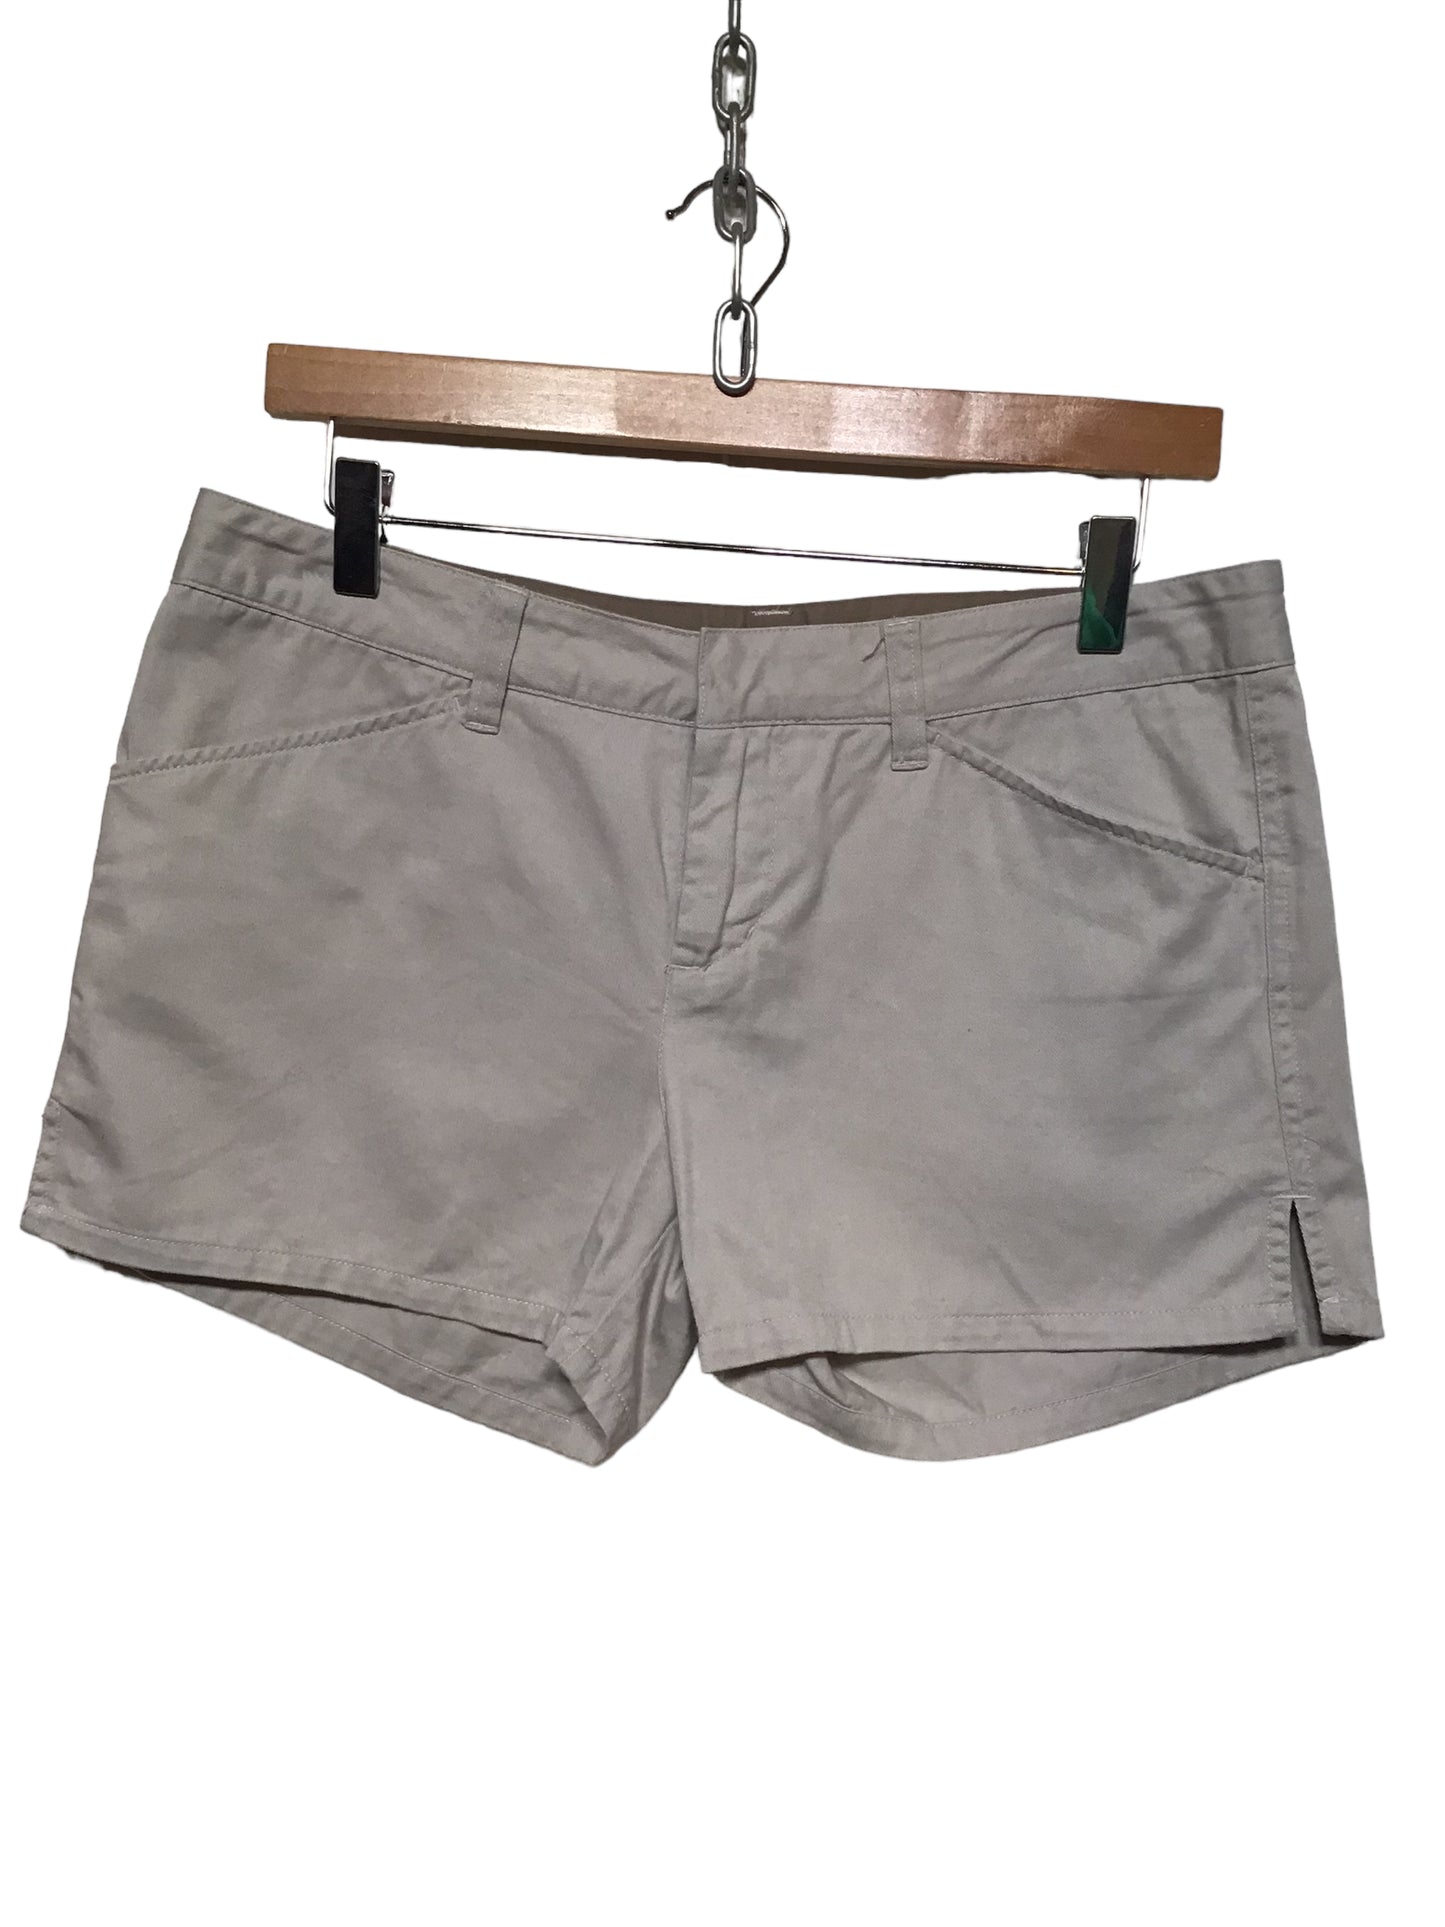 Volcom Stone Shorts (Size L)